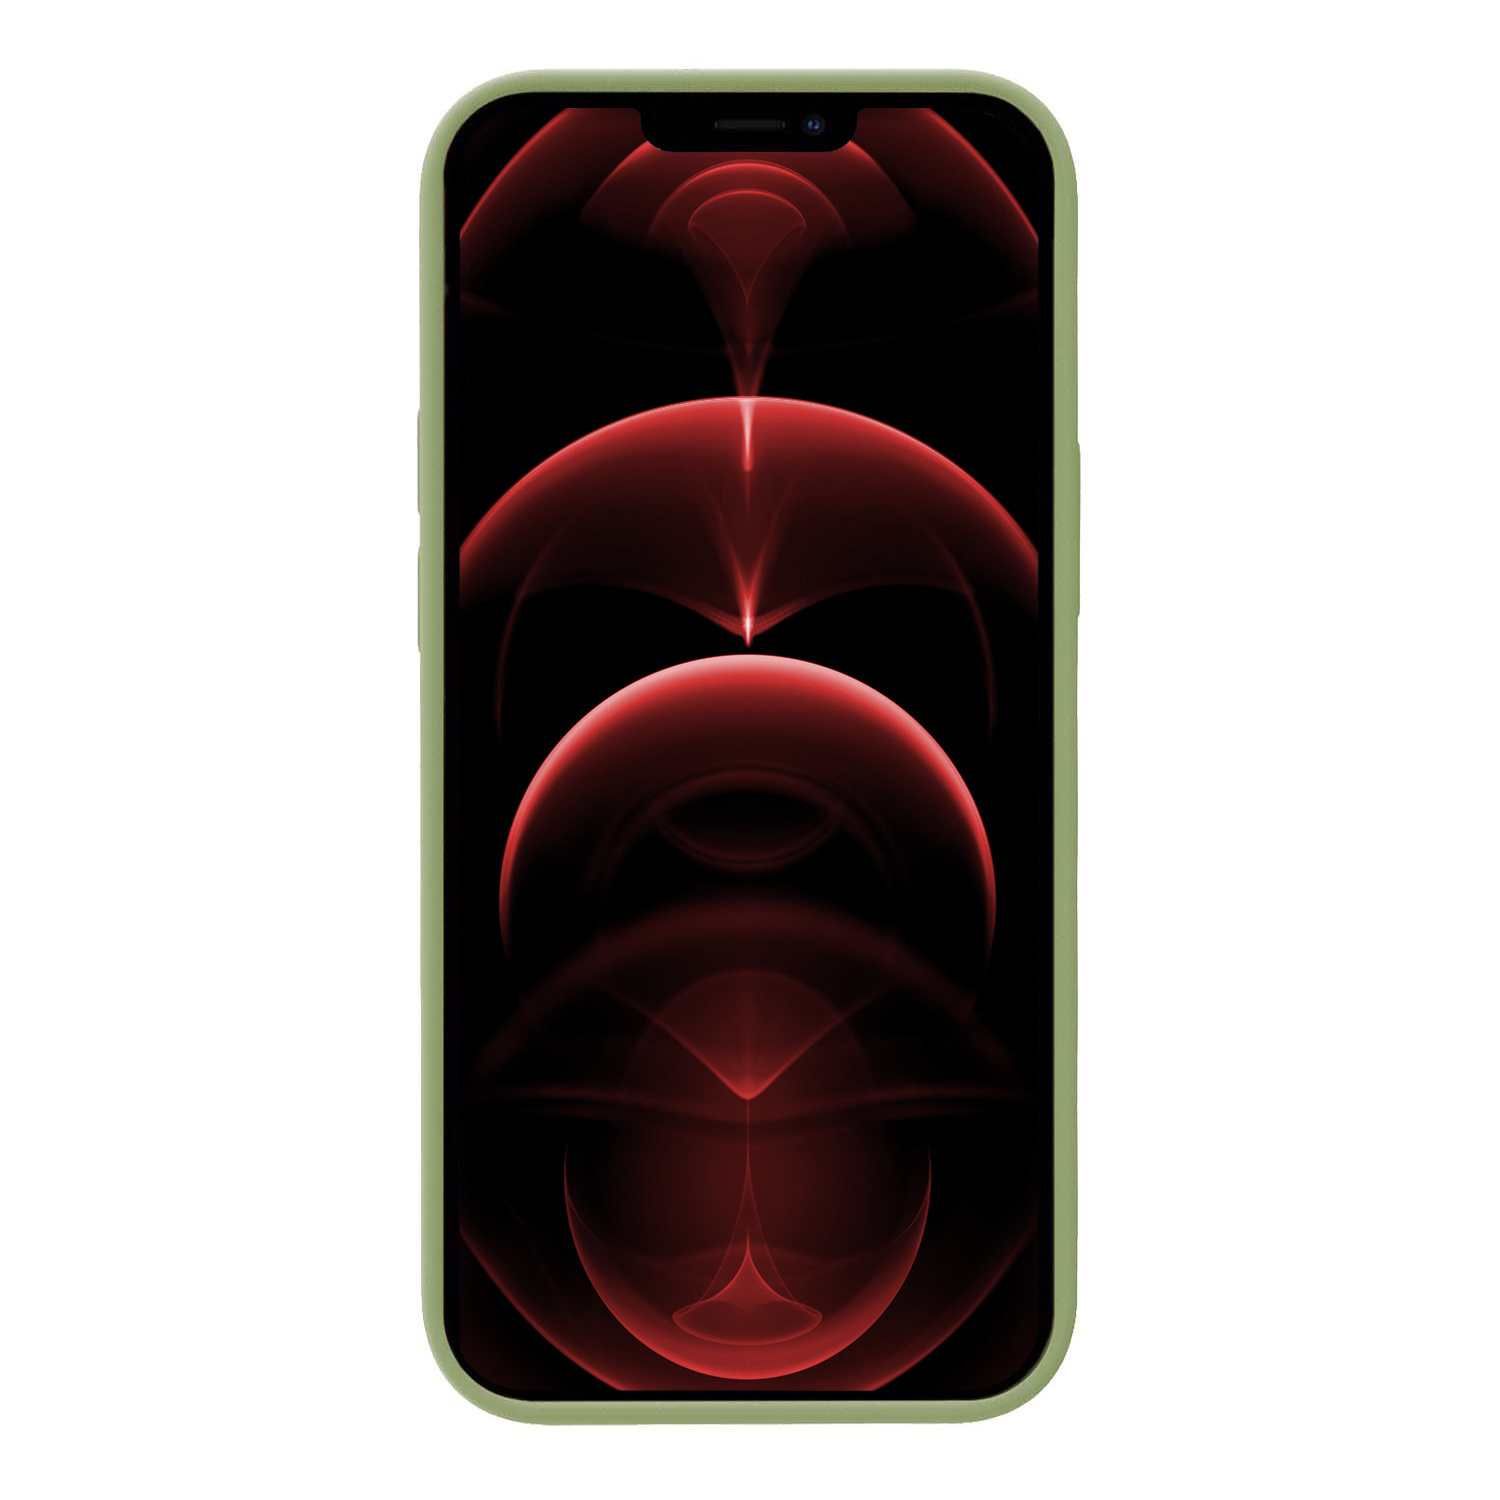 Hoes voor iPhone 14 Pro Hoesje Siliconen Case Back Cover - Hoes voor iPhone 14 Pro Hoes Cover Silicone - Groen - 2X